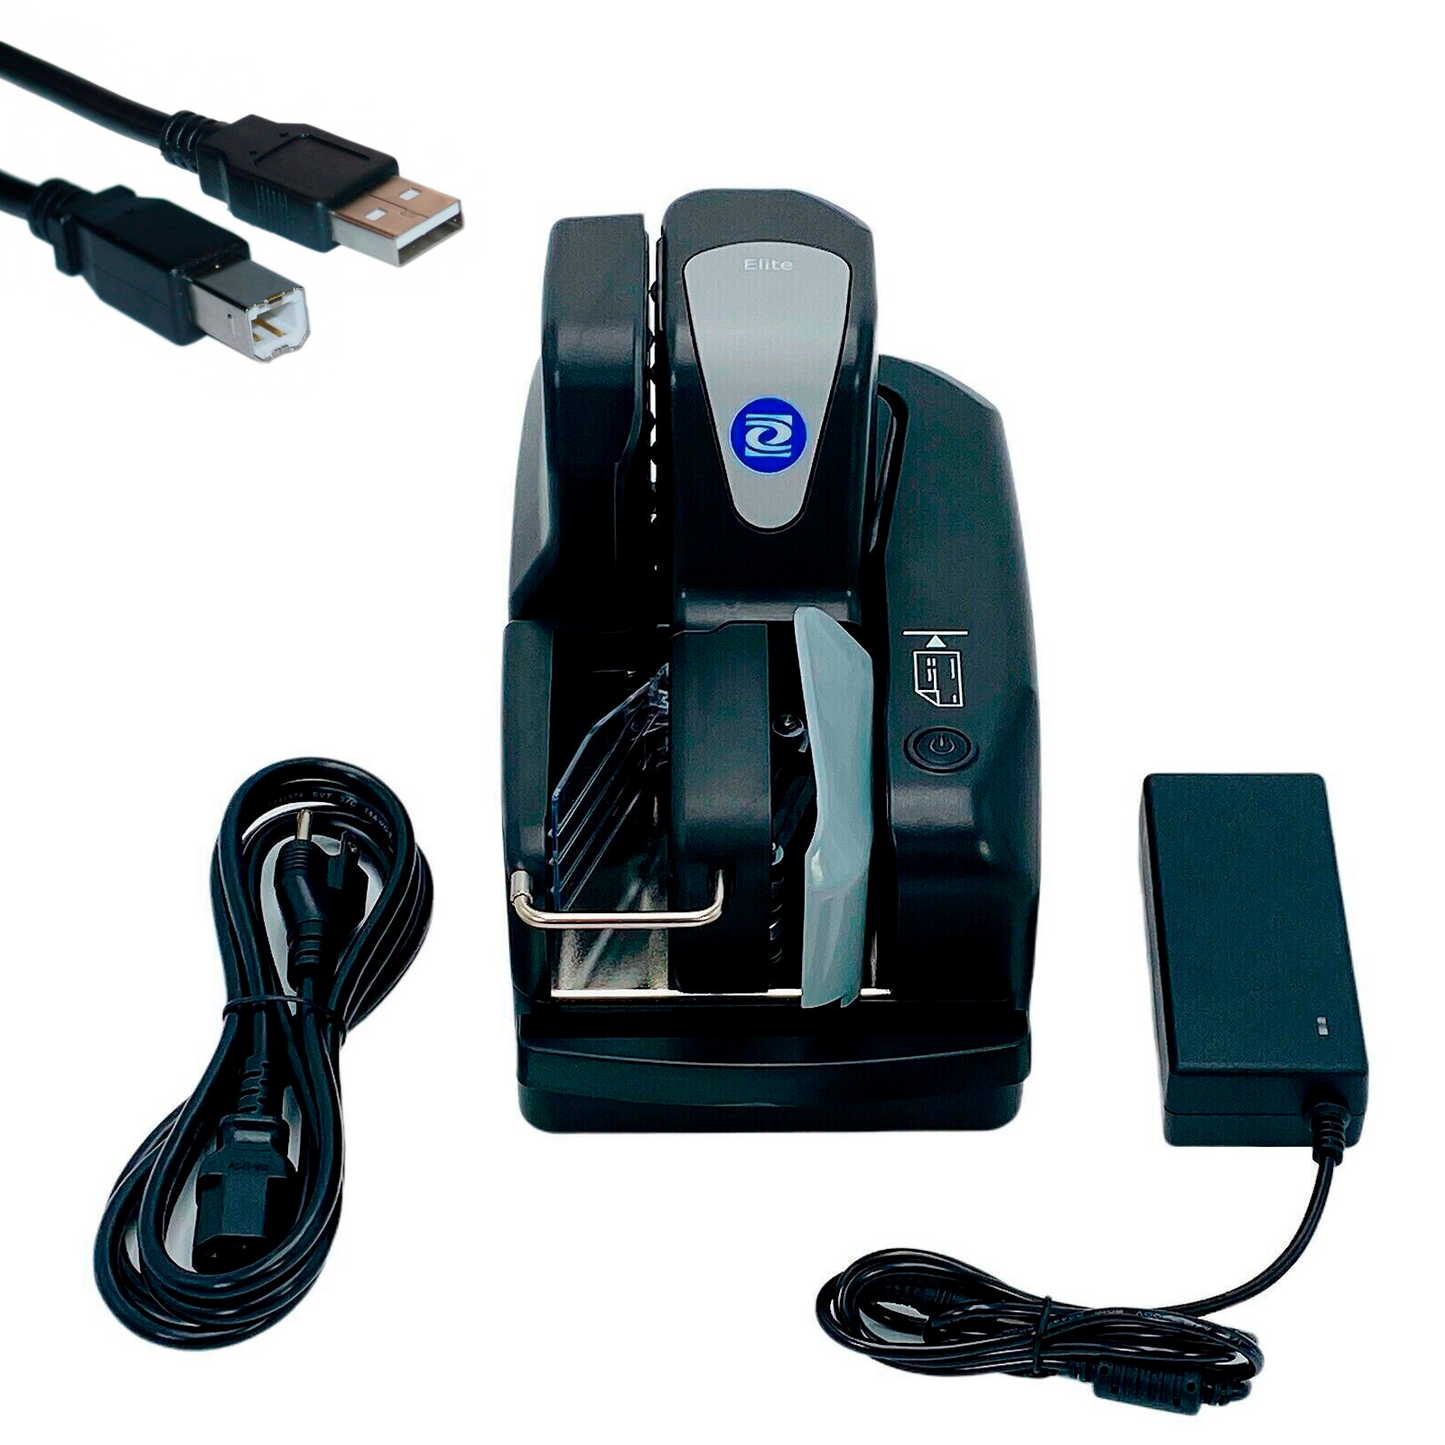 Lot of 10 Digital Check SSX1-ELITE-FS SmartSource Expert Elite Check Scanner w/Adapter & USB